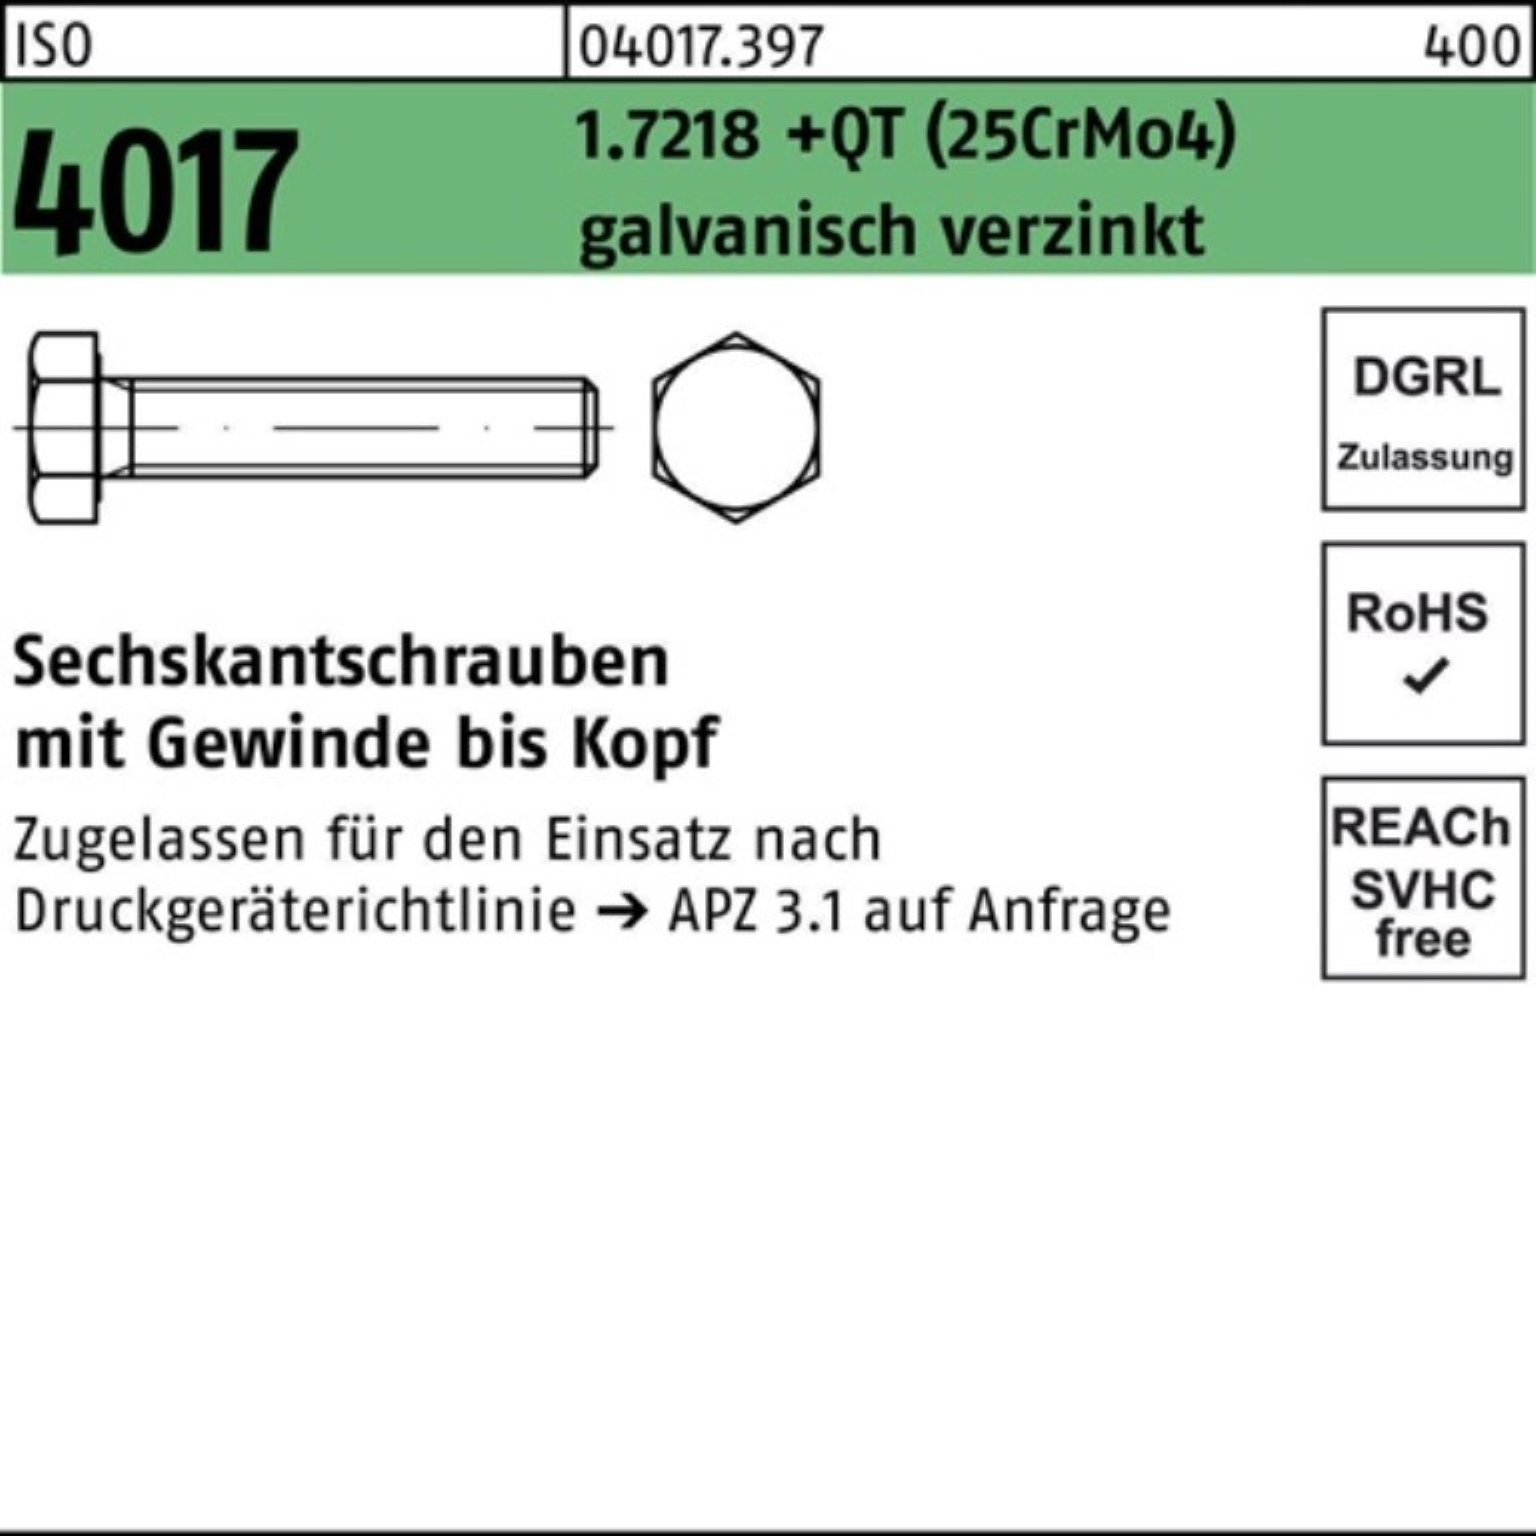 Bufab Sechskantschraube 100er Sechskantschraube g 1.7218 VG 4017 +QT Pack M30x70 ISO (25CrMo4)